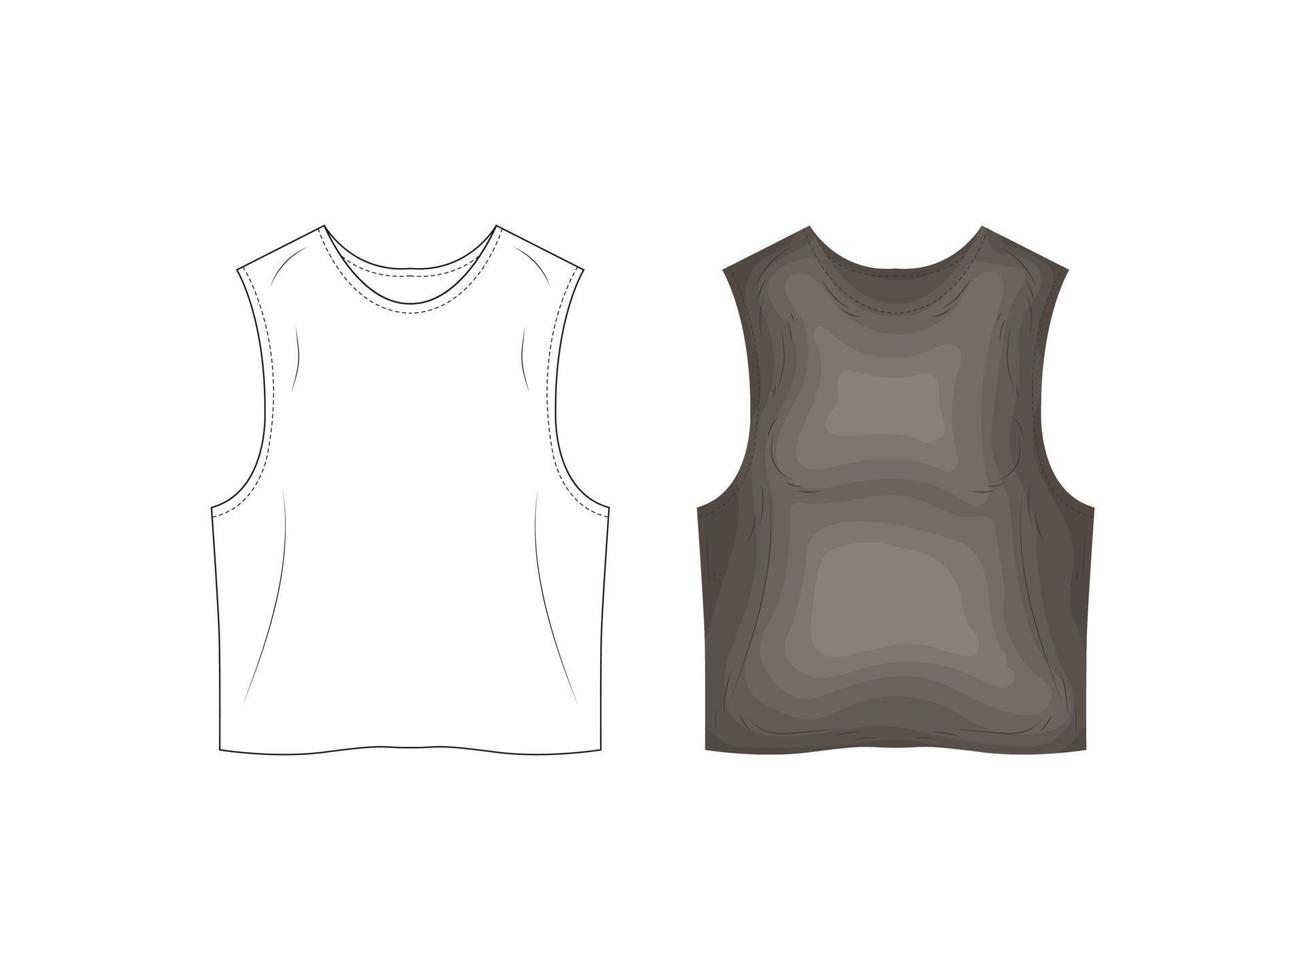 mode product catalogus uniformen mockup schets vector illustratie kleding silhouet